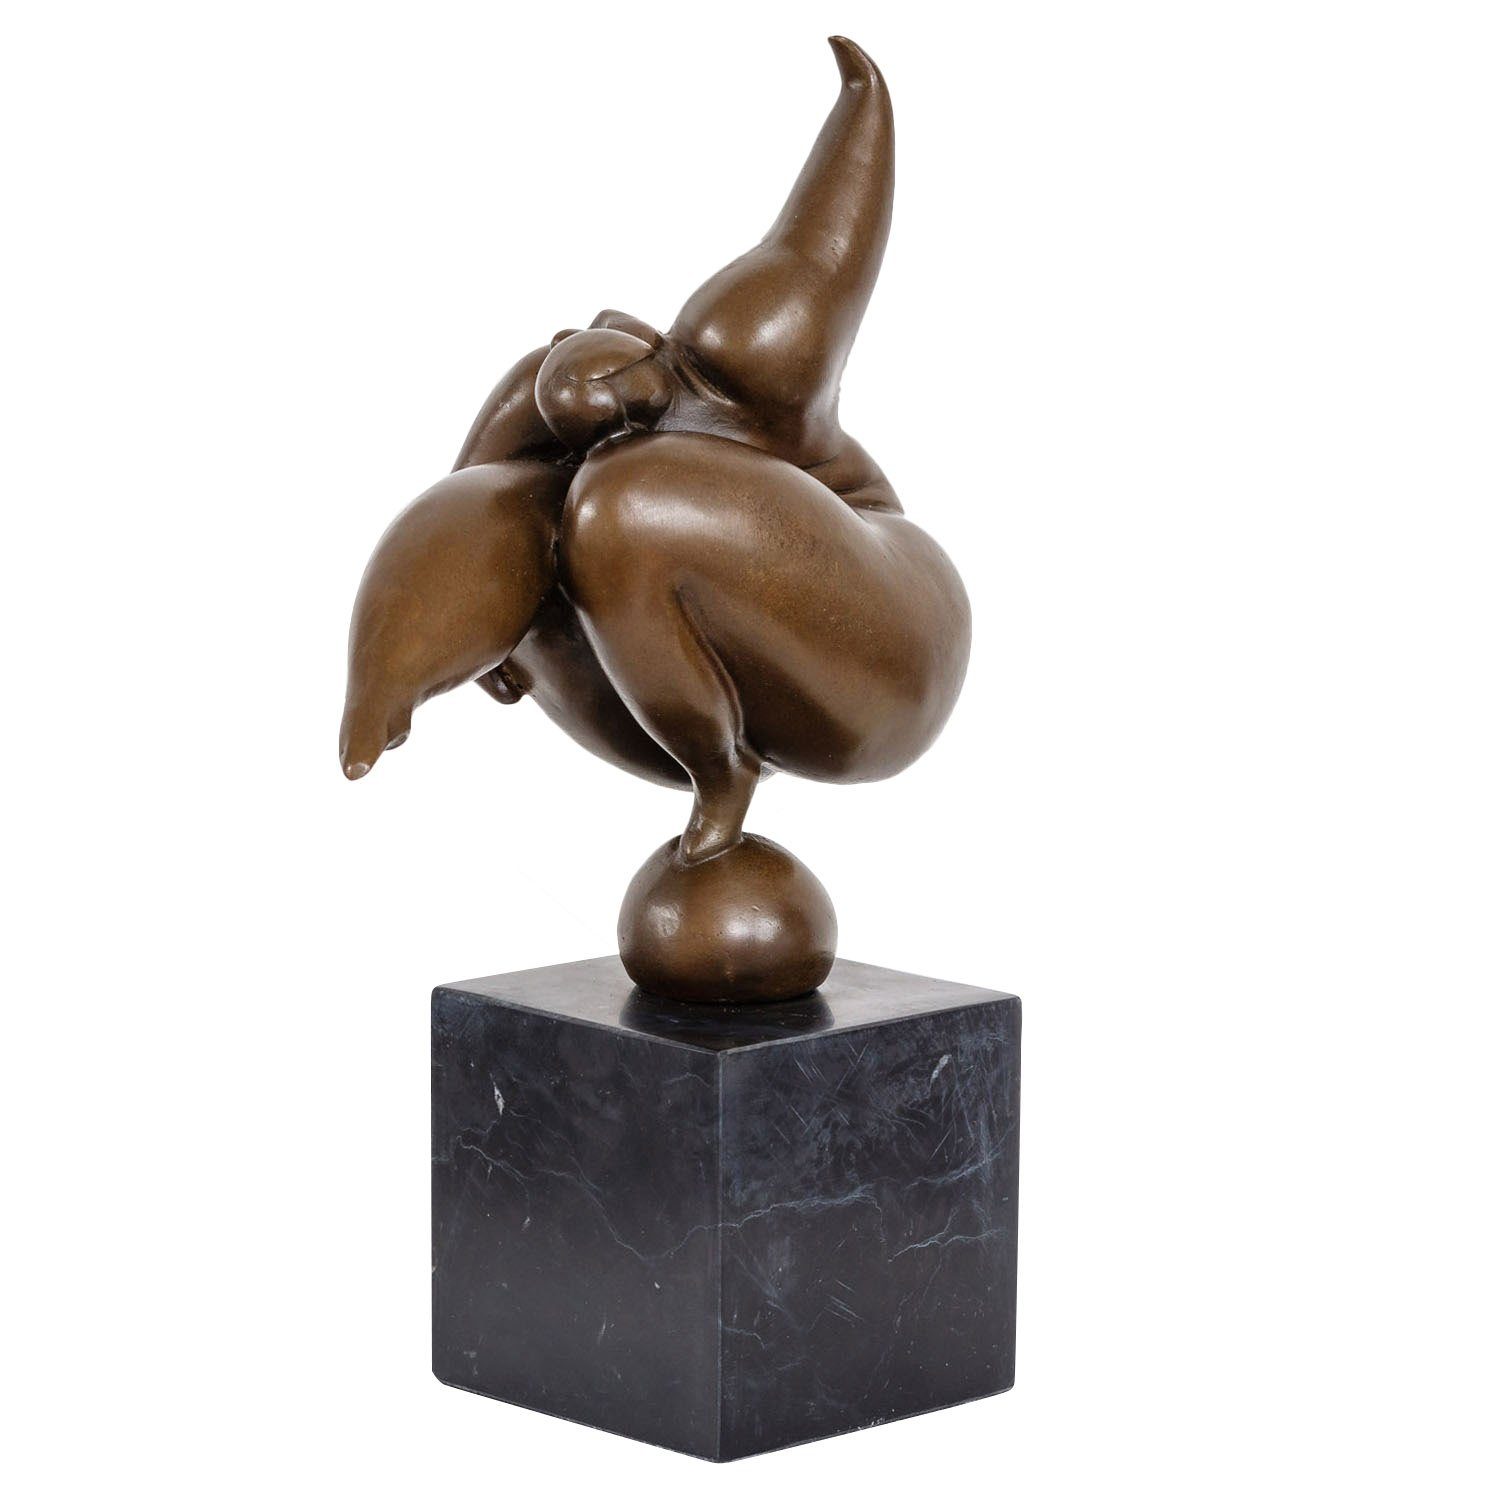 Aubaho Skulptur Bronzeskulptur Erotik erotische Kunst Statu Bronze Figur Antik-Stil im